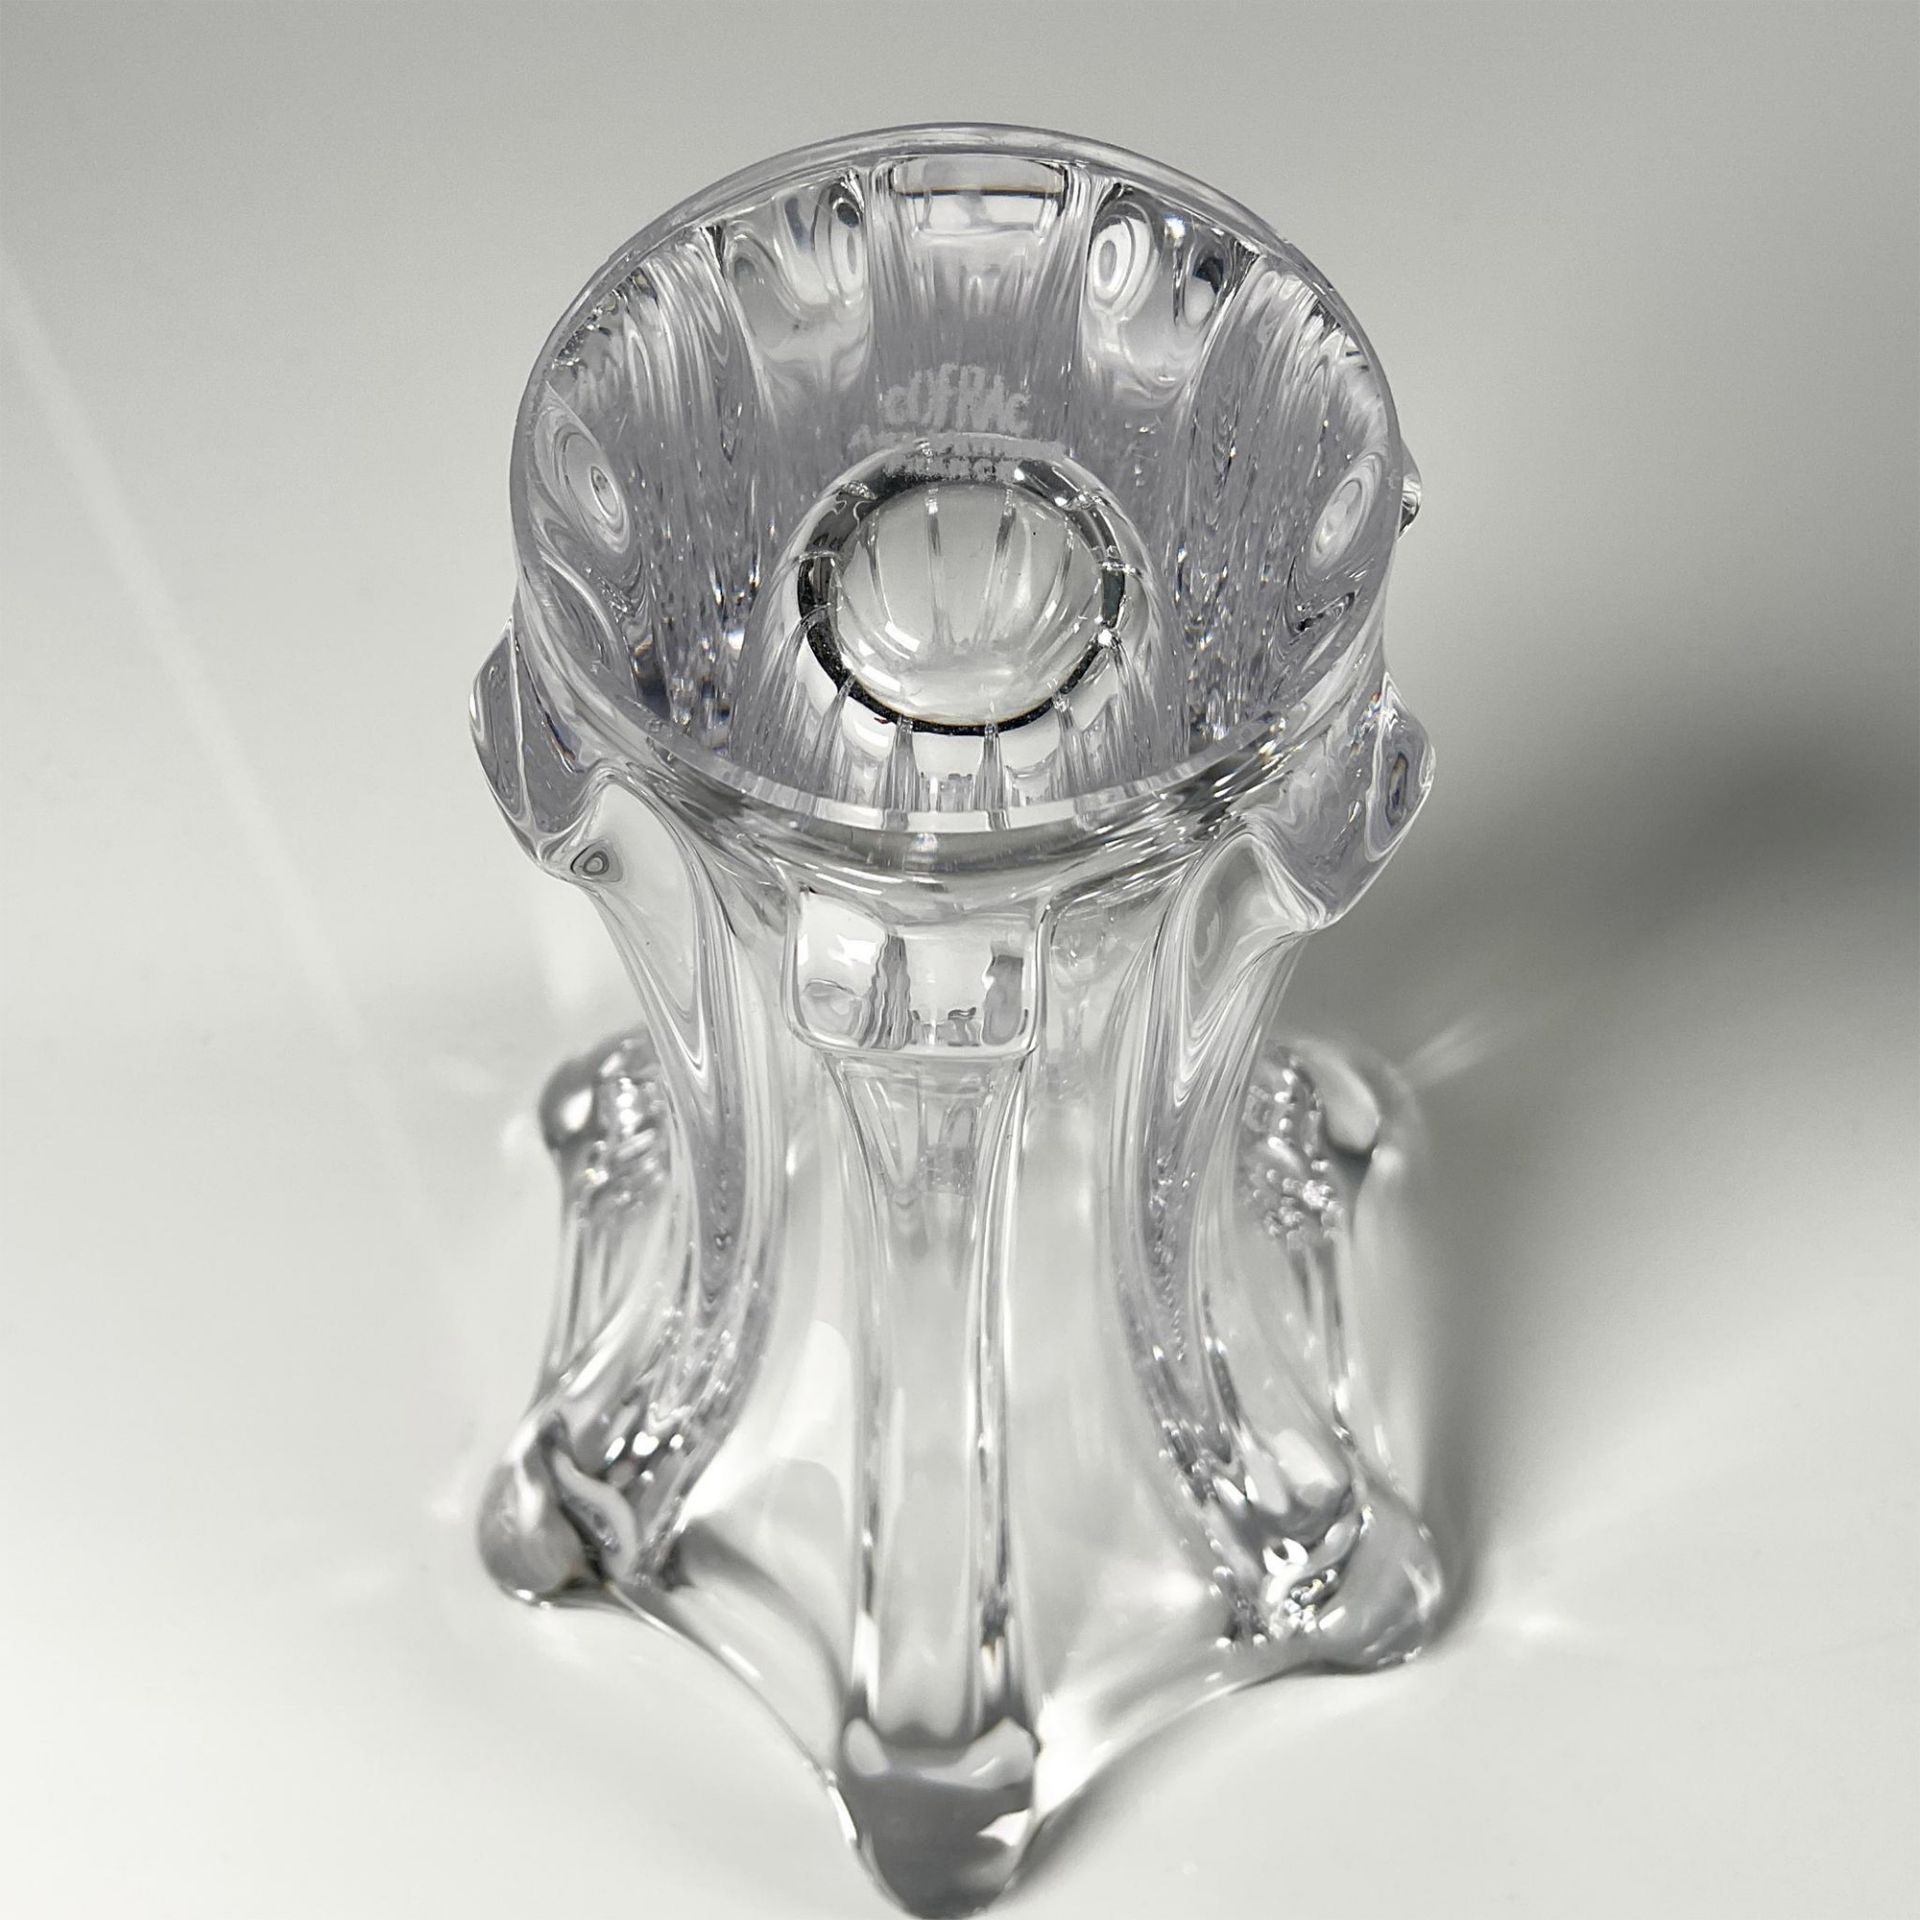 2pc Cofrac Art Verrier Crystal Vases - Image 4 of 4